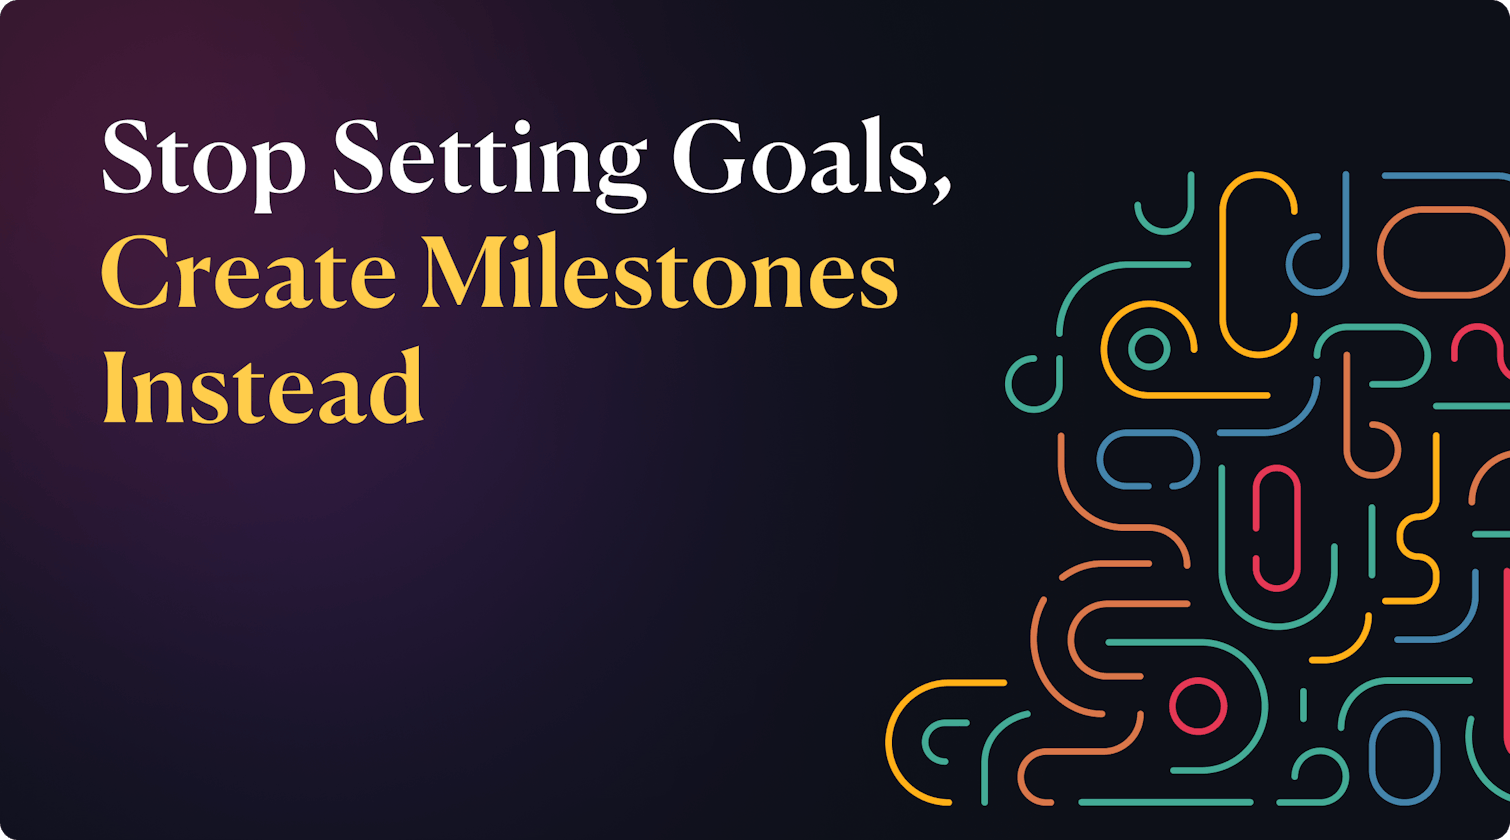 Stop setting goals, create milestones instead